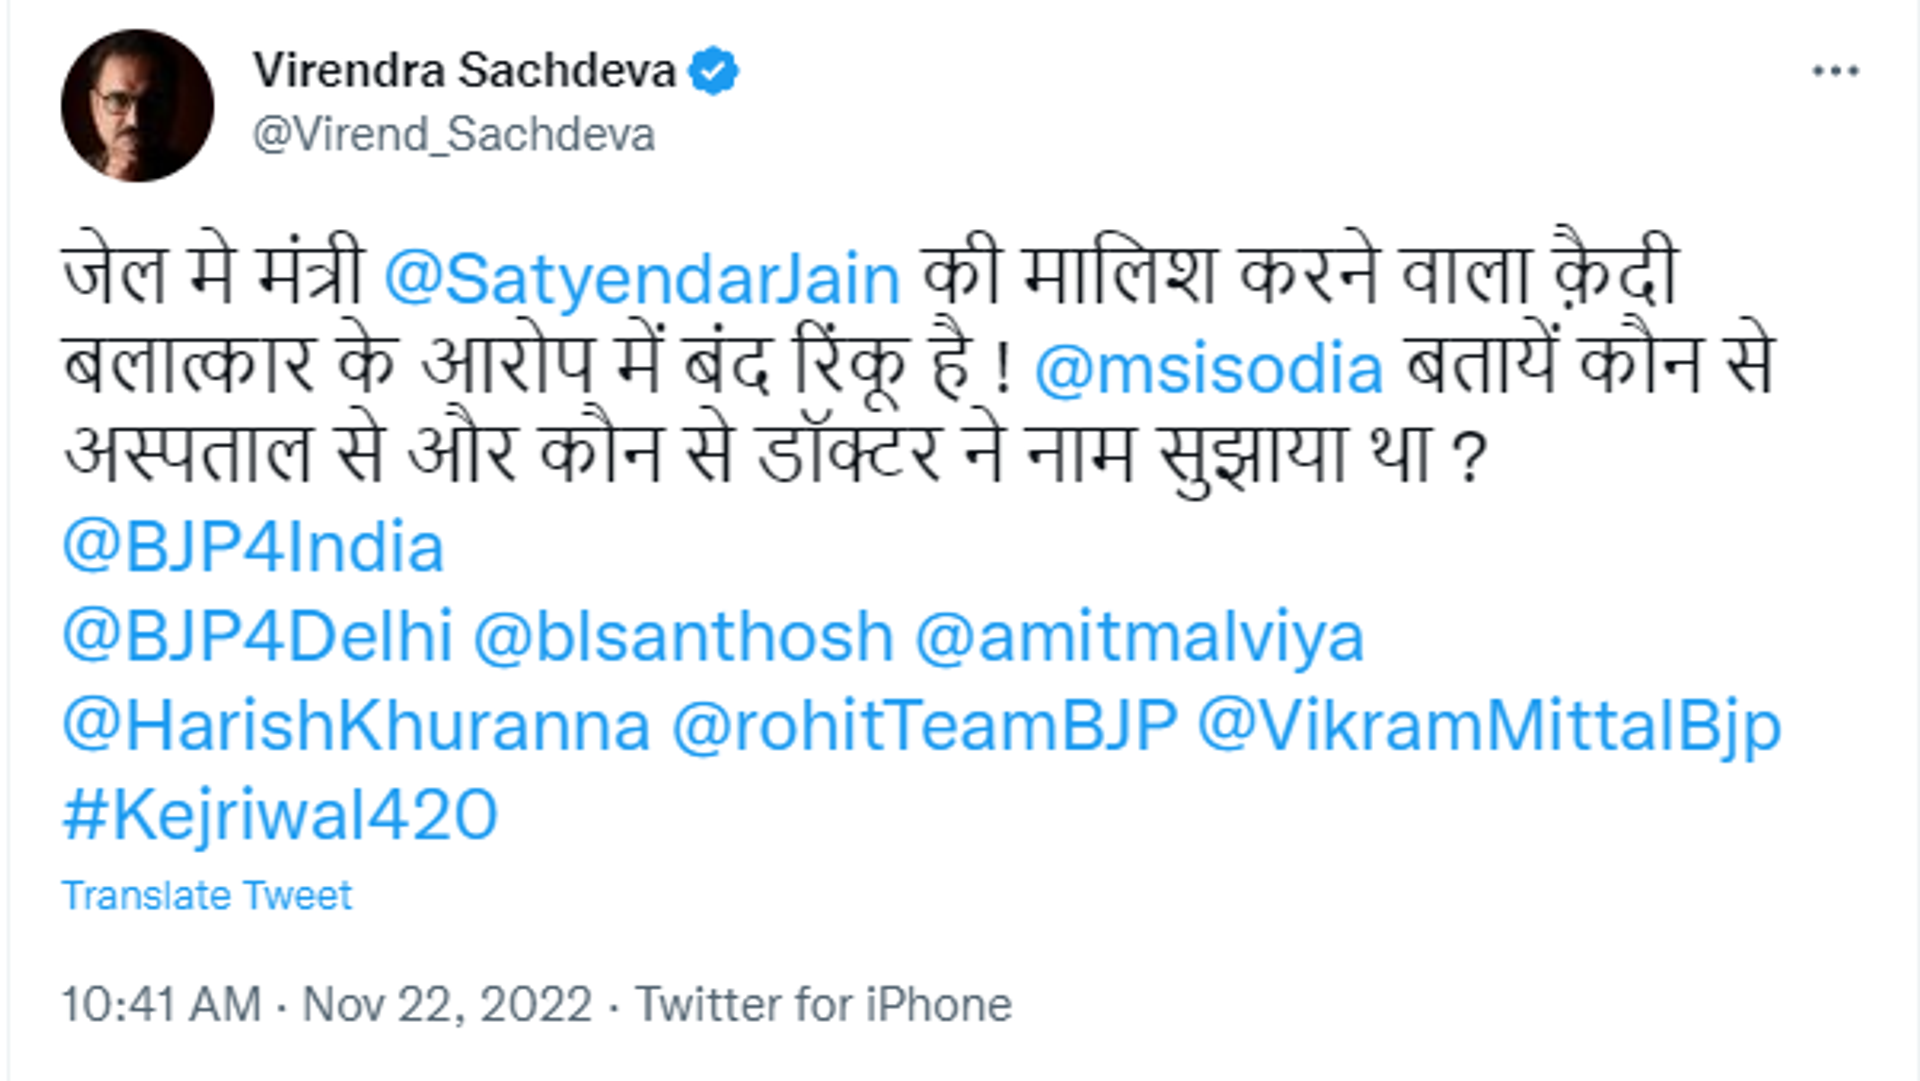 BJP's Delhi Unit Vice President Slams AAP after New Twist over Viral Videos of Satyendar Jain Getting Massage in Prison - Sputnik International, 1920, 22.11.2022